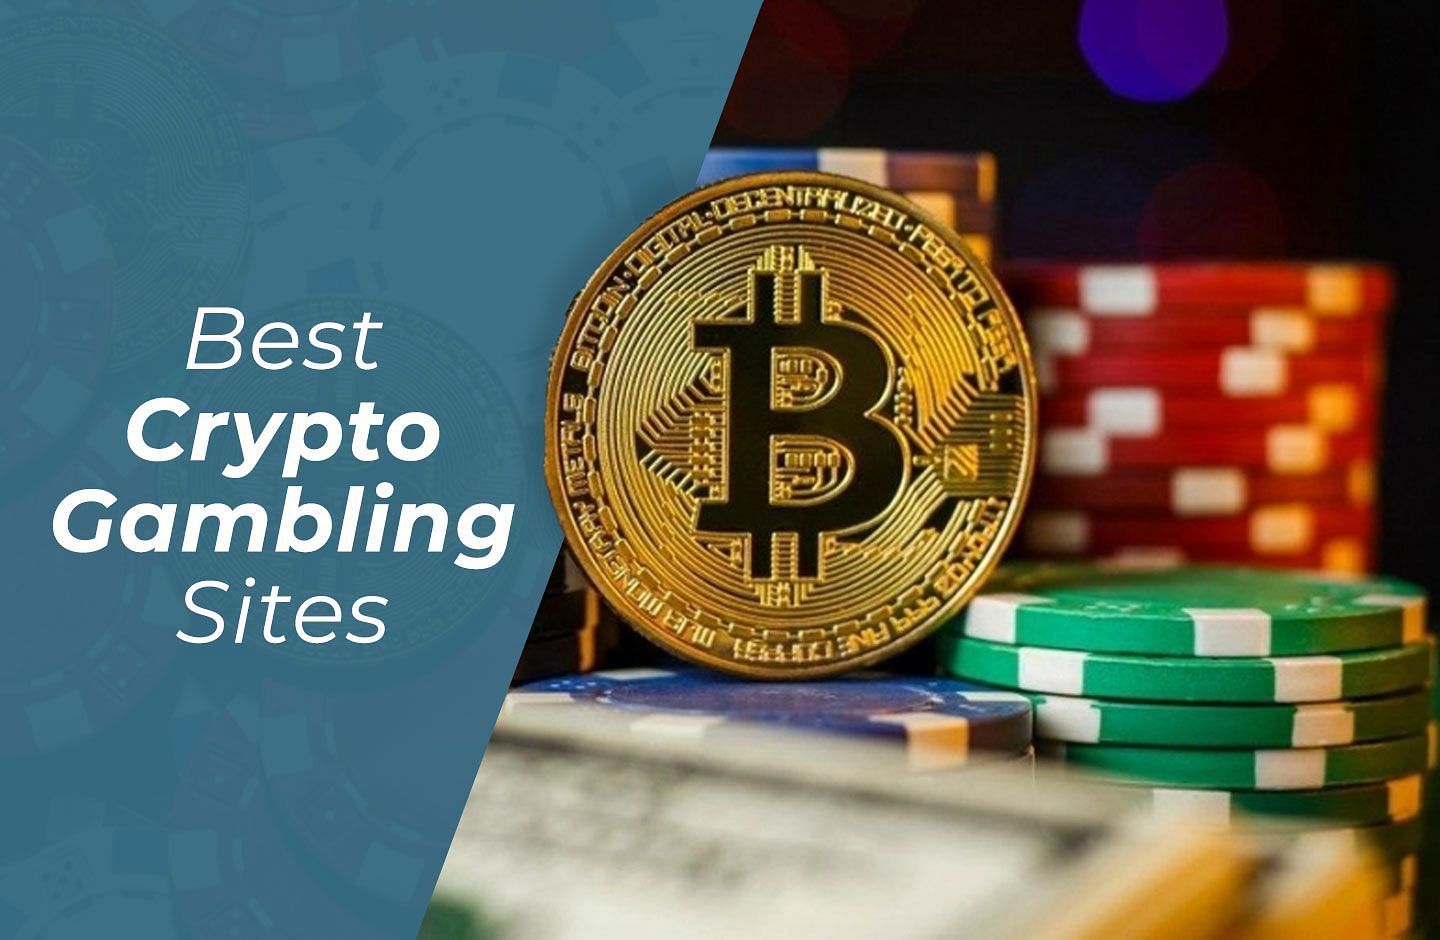 5 Emerging best bitcoin casino Trends To Watch In 2021